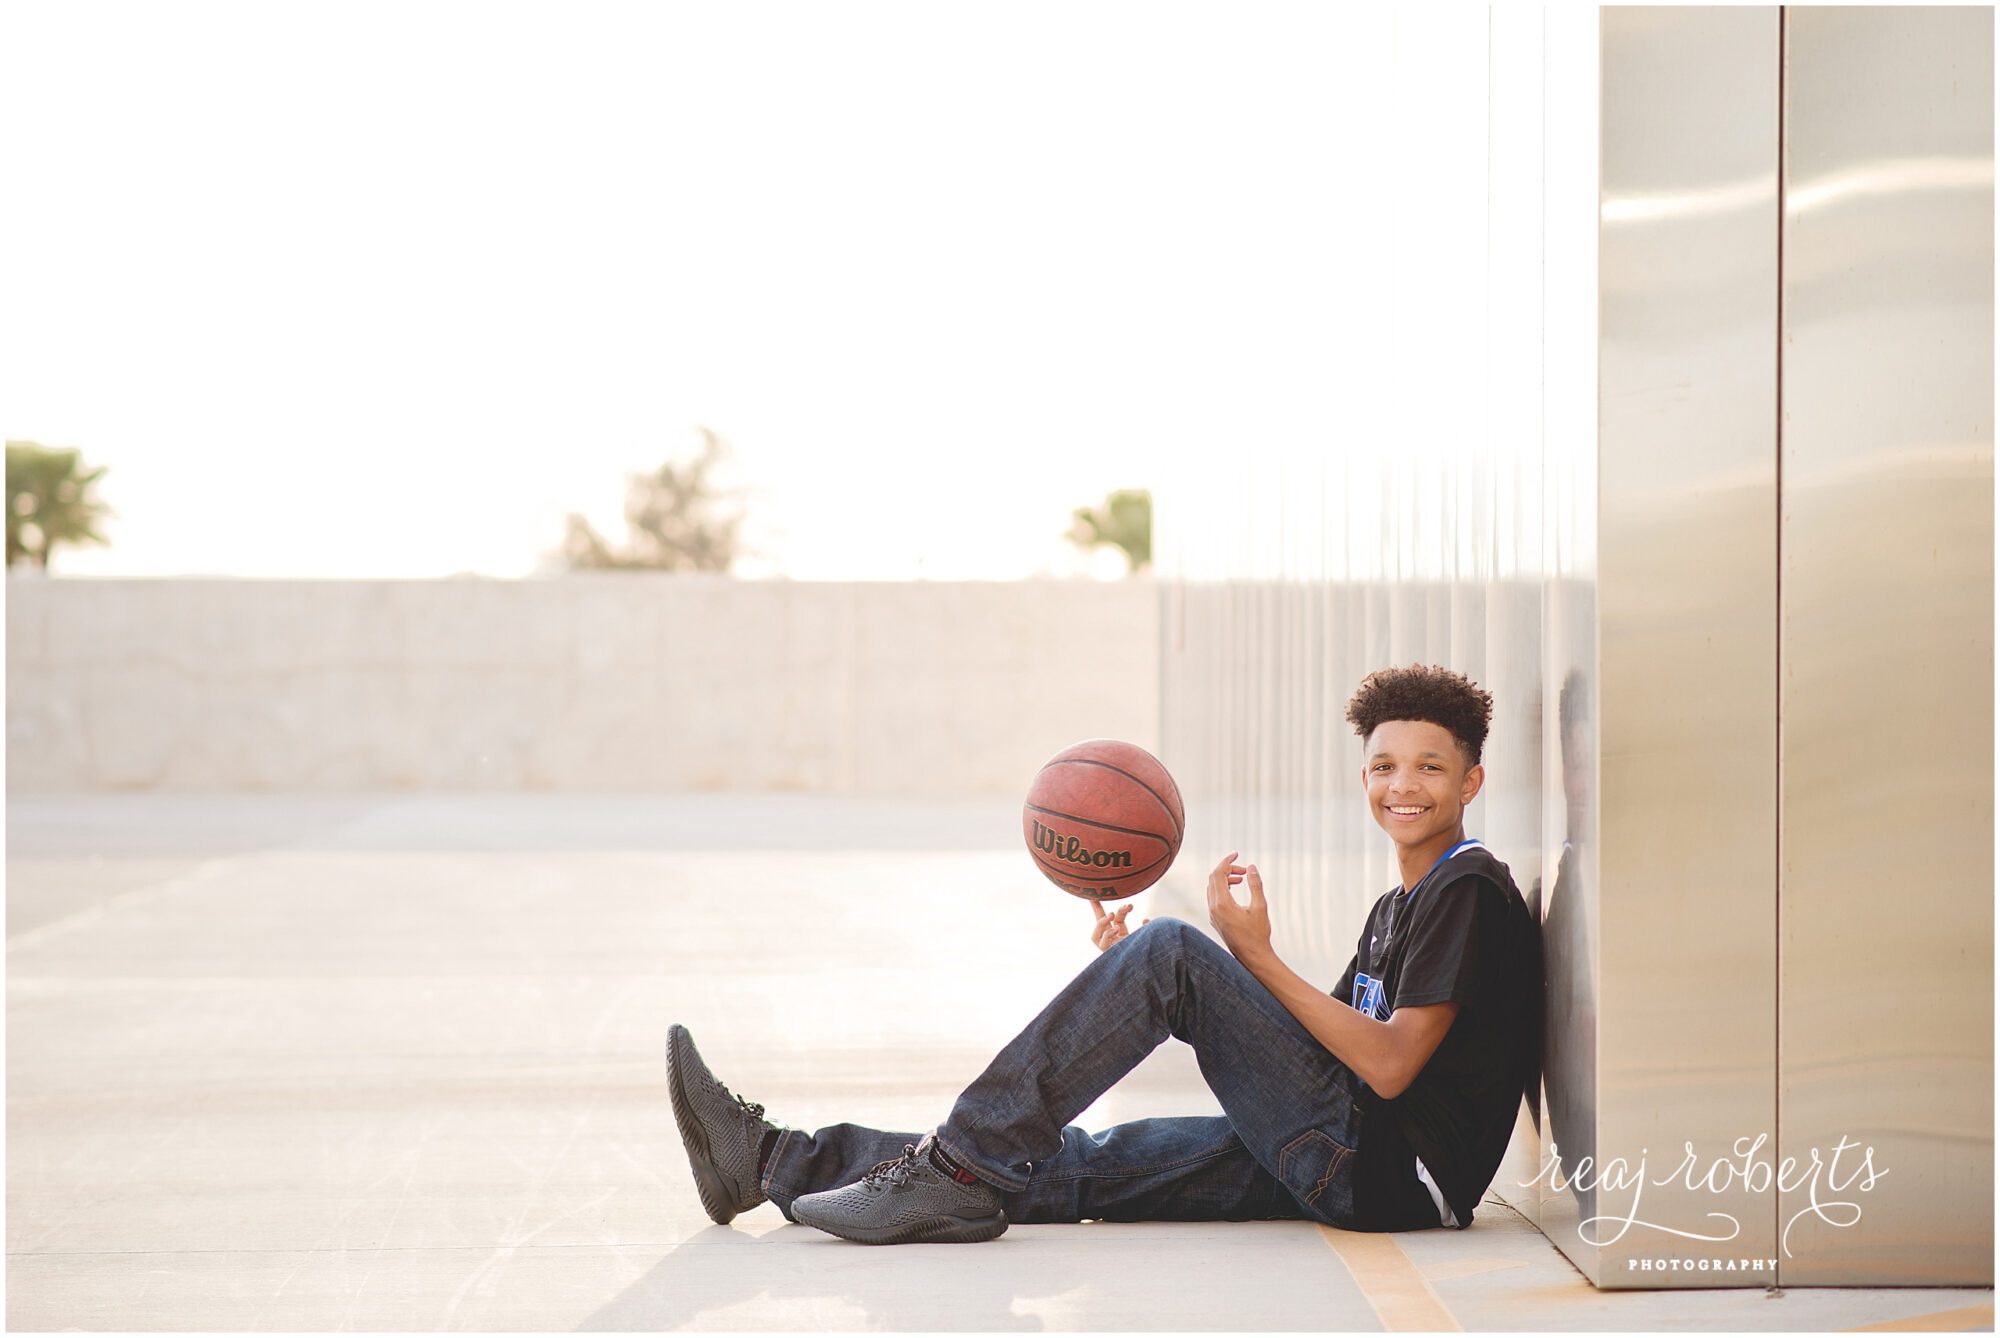 High School Senior Photos with Basketball | Chandler, AZ | Reaj Roberts Photography